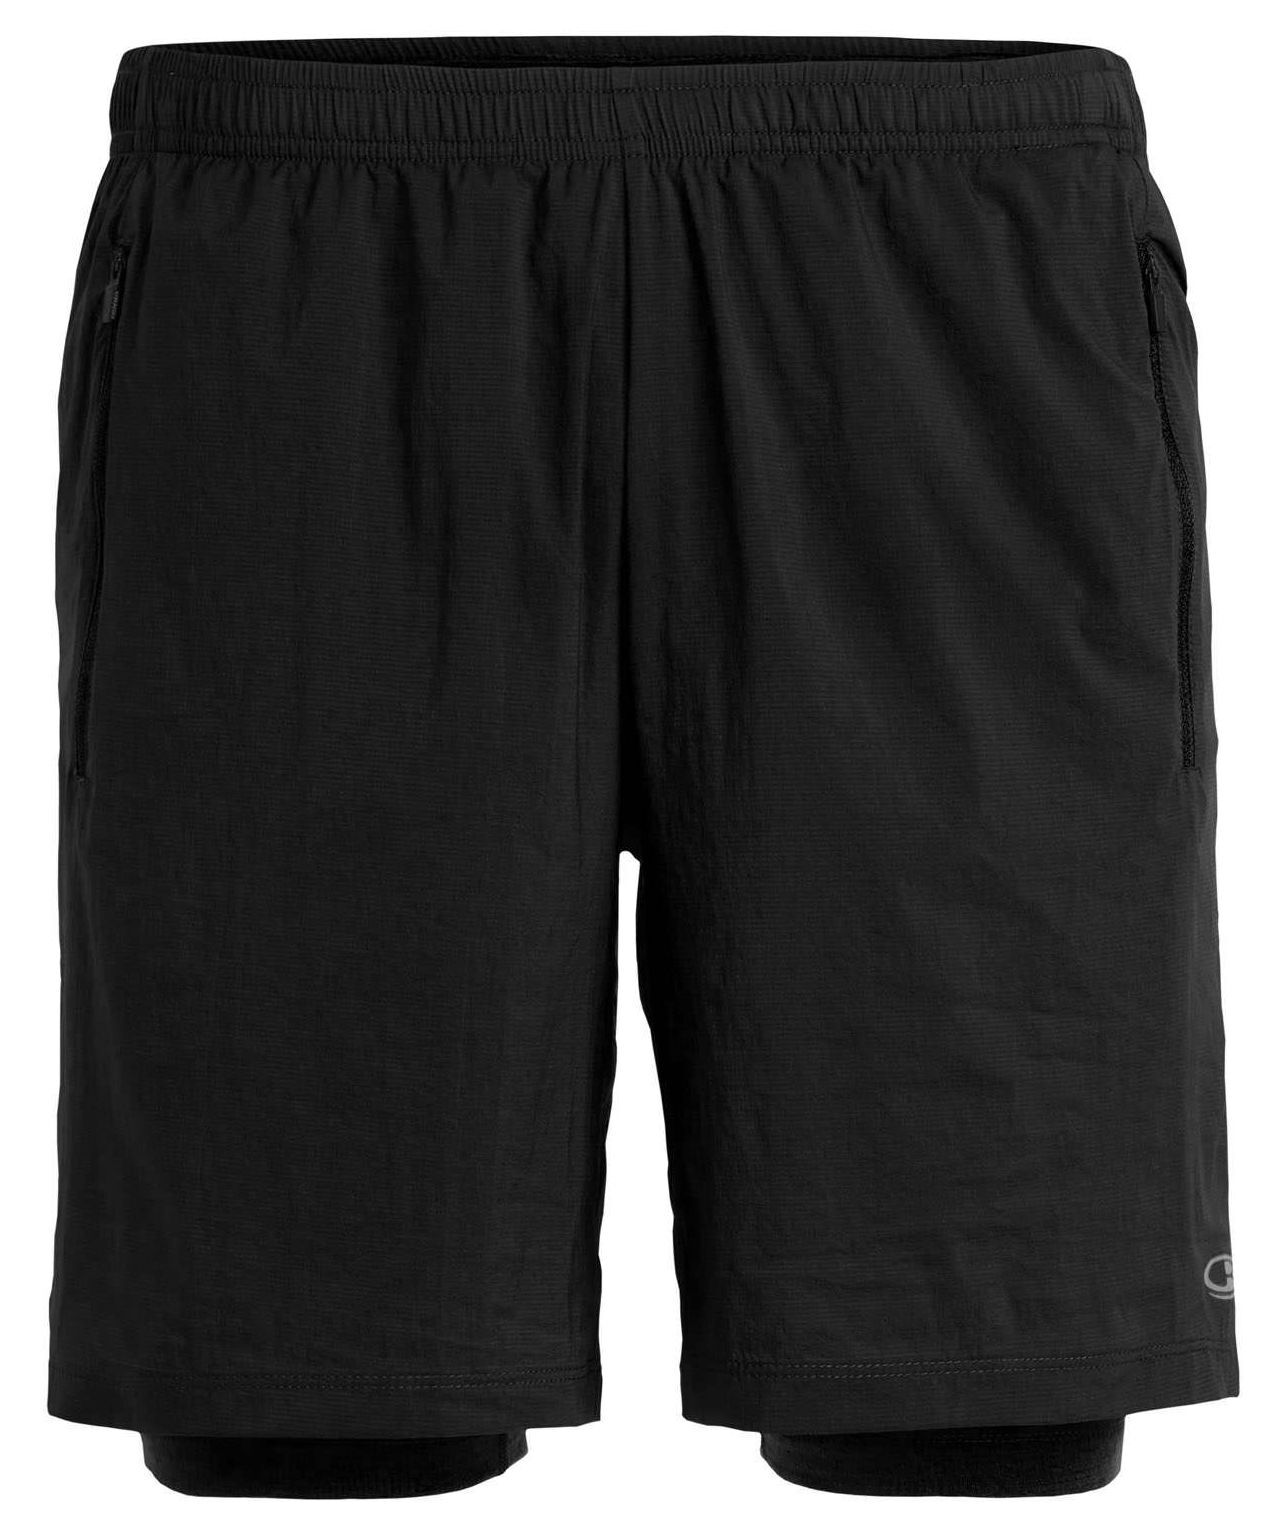 Icebreaker Cool-Lite Impulse Training Shorts - Running shorts - Men's